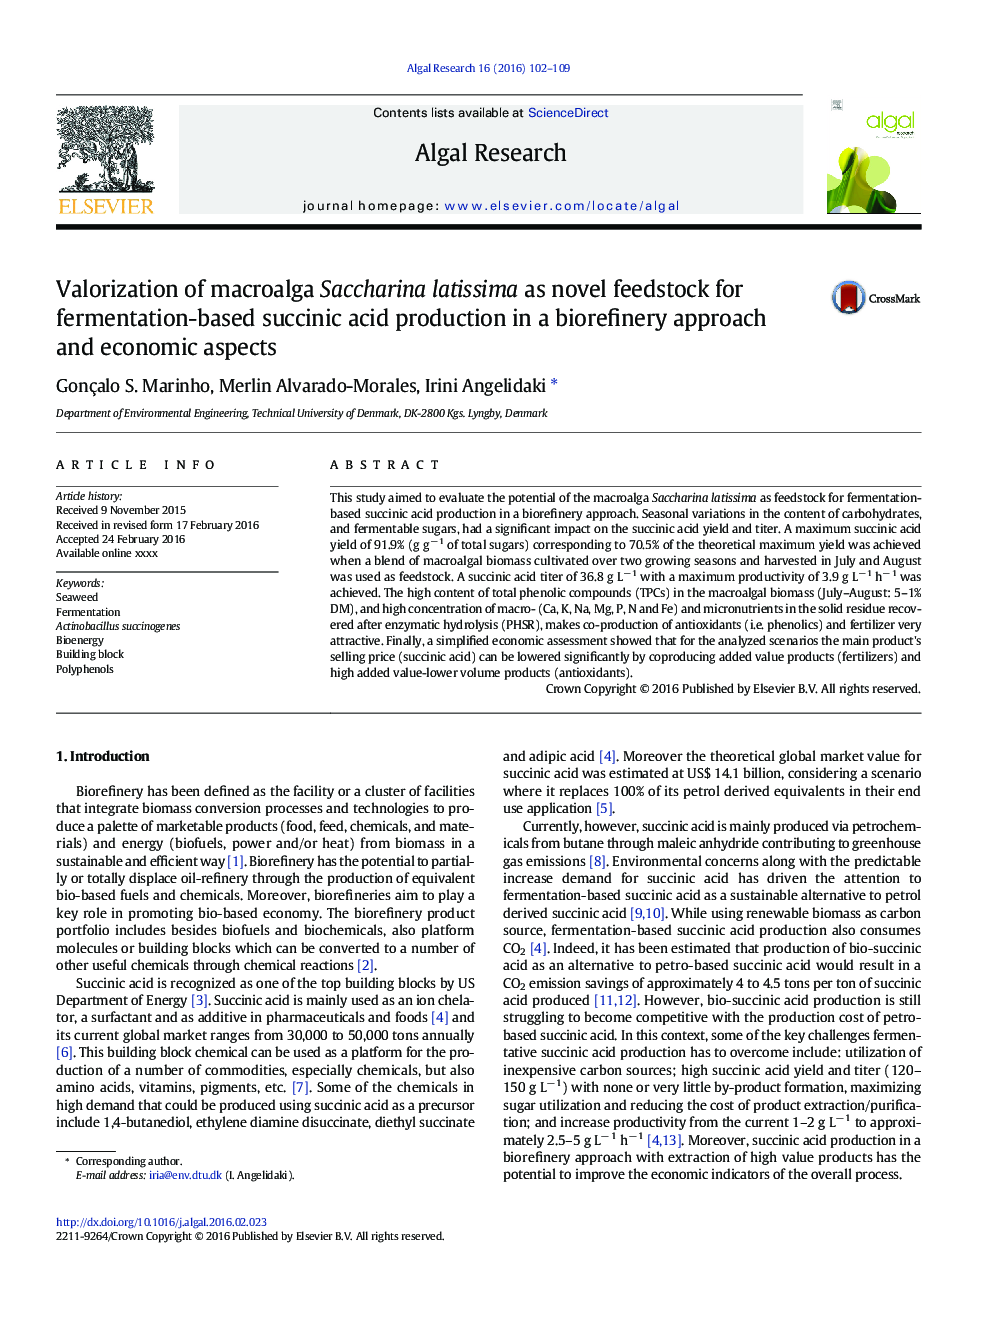 Valorization of macroalga Saccharina latissima as novel feedstock for fermentation-based succinic acid production in a biorefinery approach and economic aspects